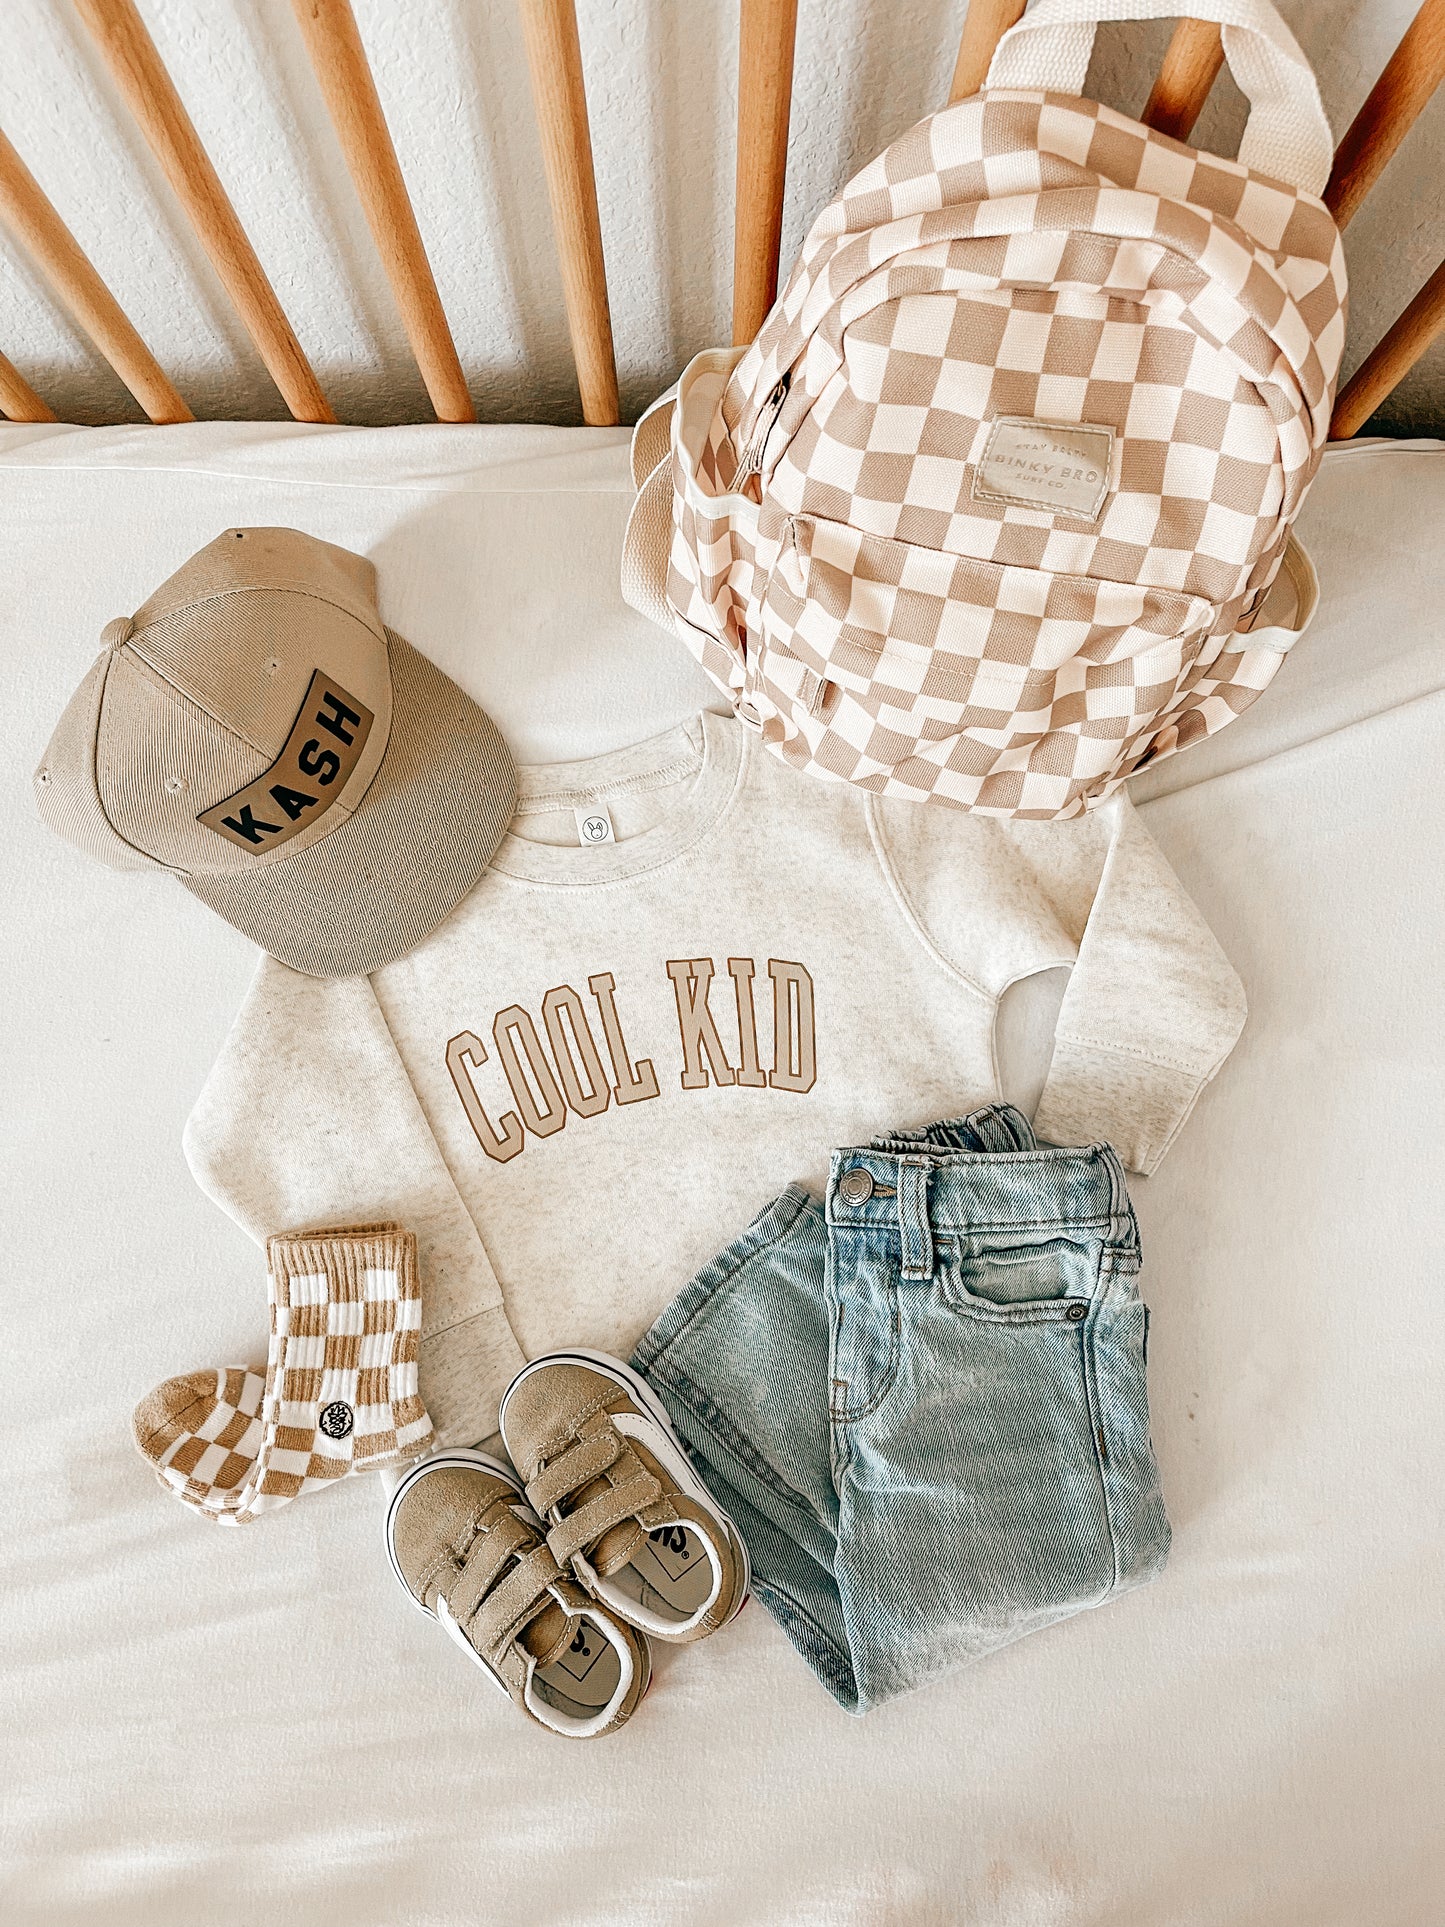 Cool Kid (Tan Varsity) - Kids Sweatshirt (Heather Natural)